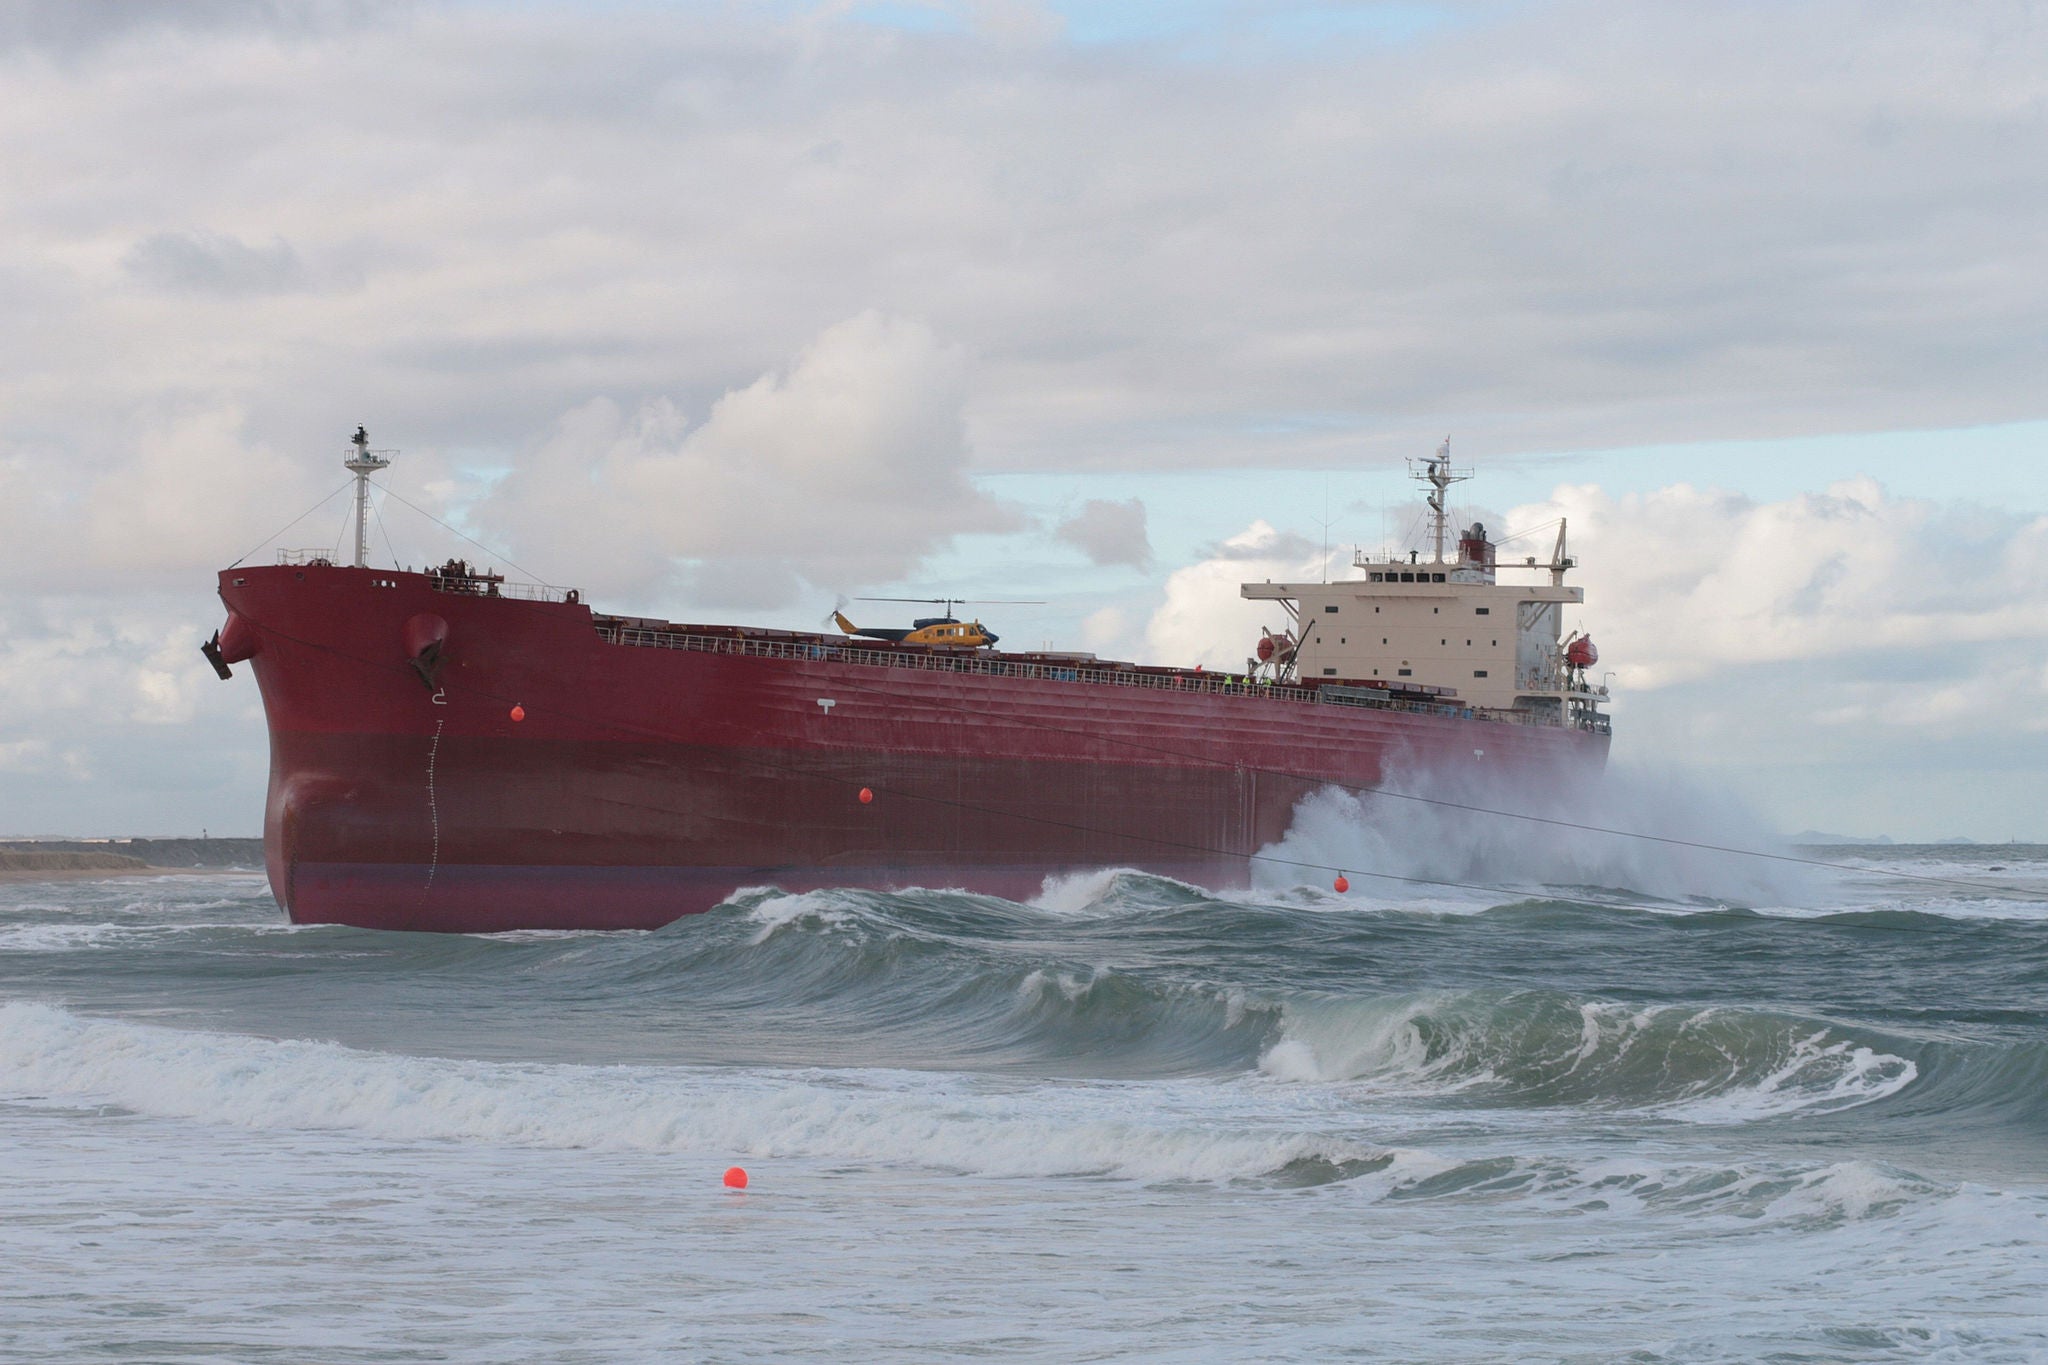 Beached cargo ship australia